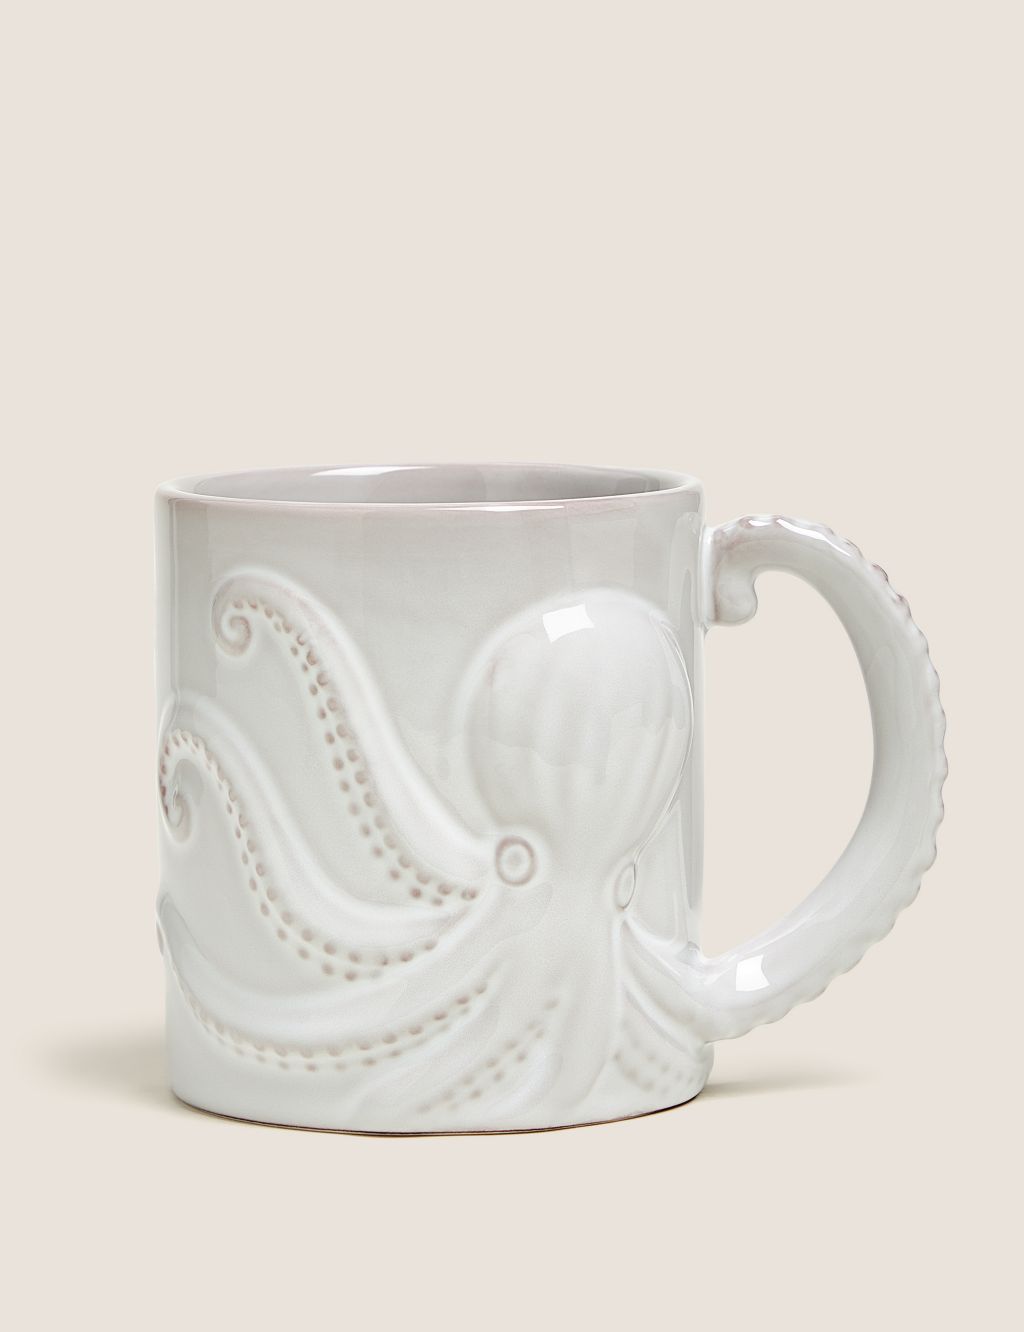 Octopus Mug image 1